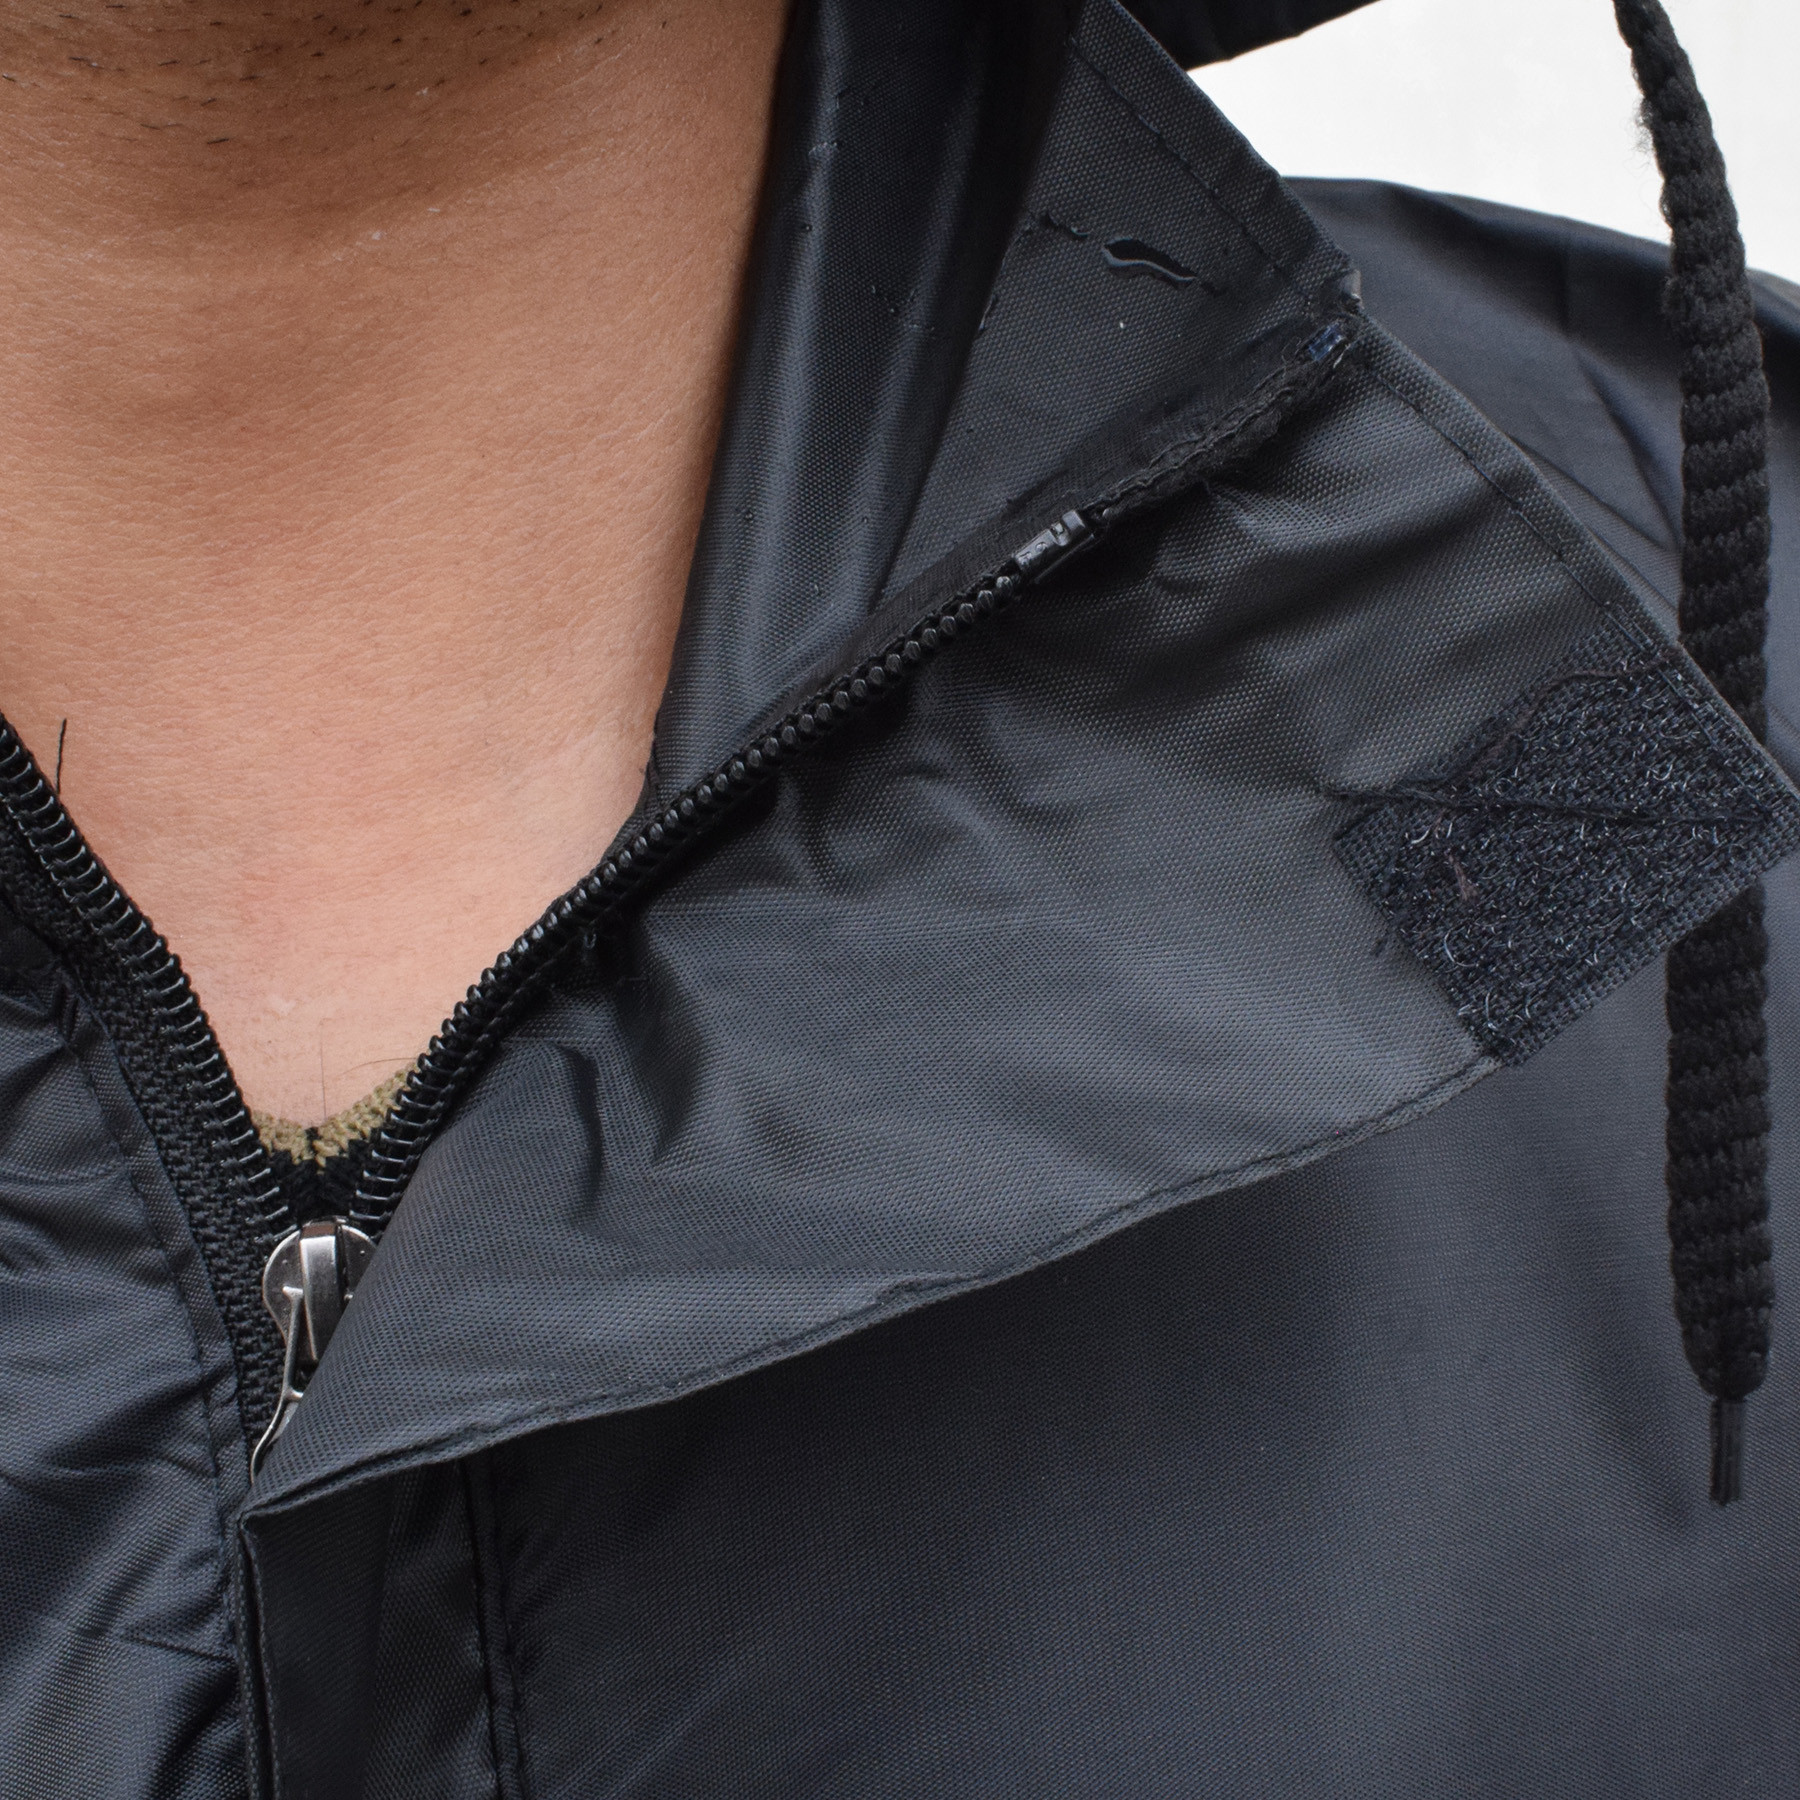 Kuber Industries PVC Raincoat With Adjustable Hood For Men & Women (Black) XL